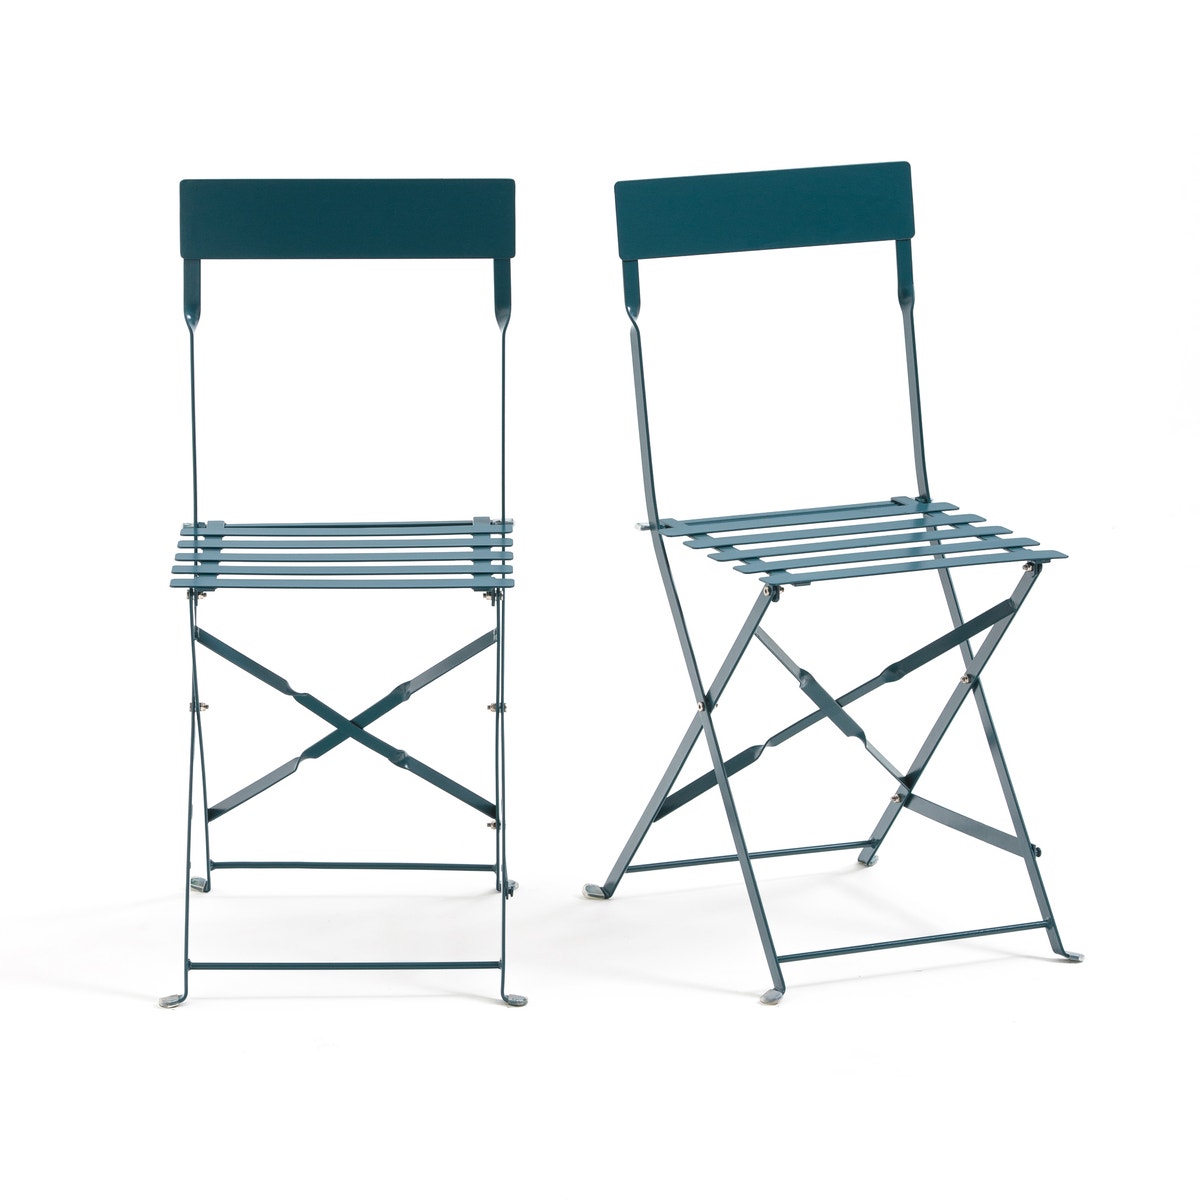 La Redoute for Business > Έπιπλα > Έπιπλα κήπου > Καρέκλες, πολυθρόνες, παγκάκια Μεταλλική σπαστή καρέκλα OZEVAN (σετ των 2)